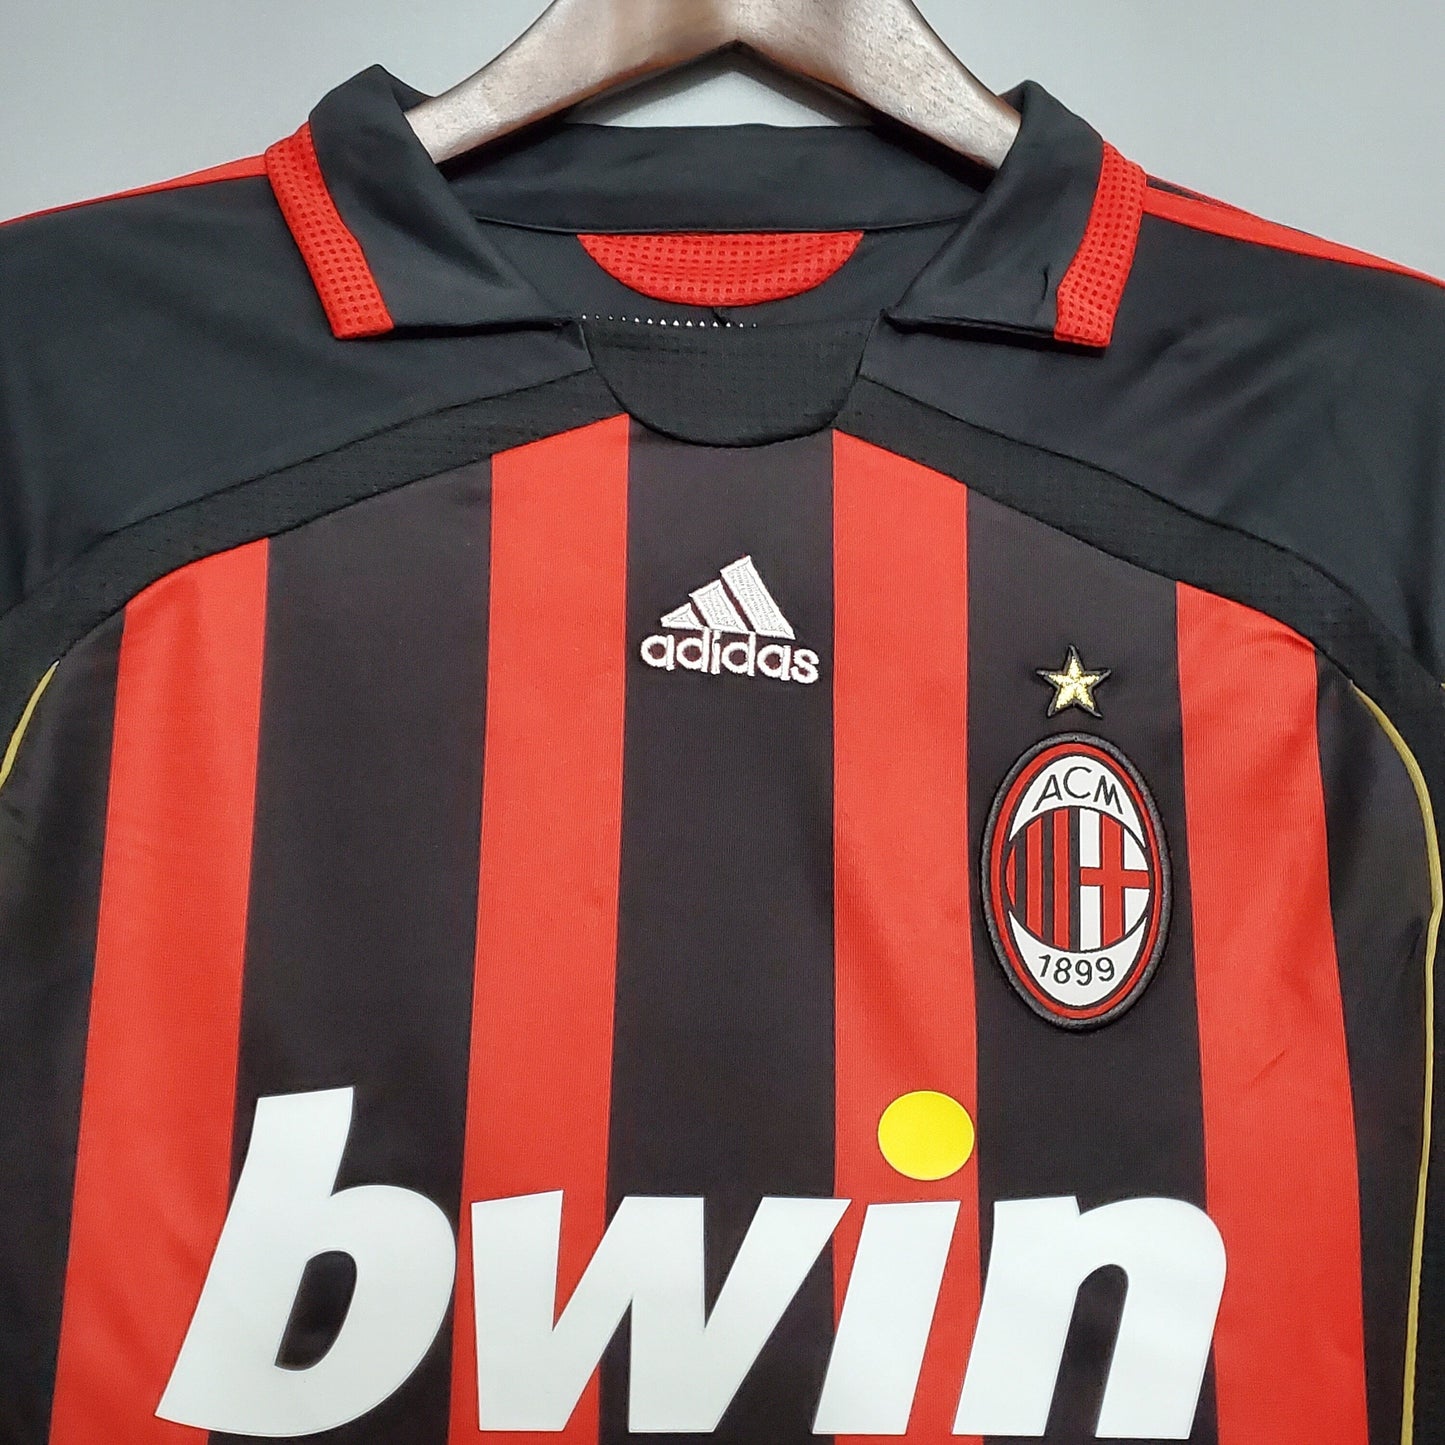 AC Milan 06/07 Classic Retro Home Shirt - Kaka/ Nesta/ Pirlo